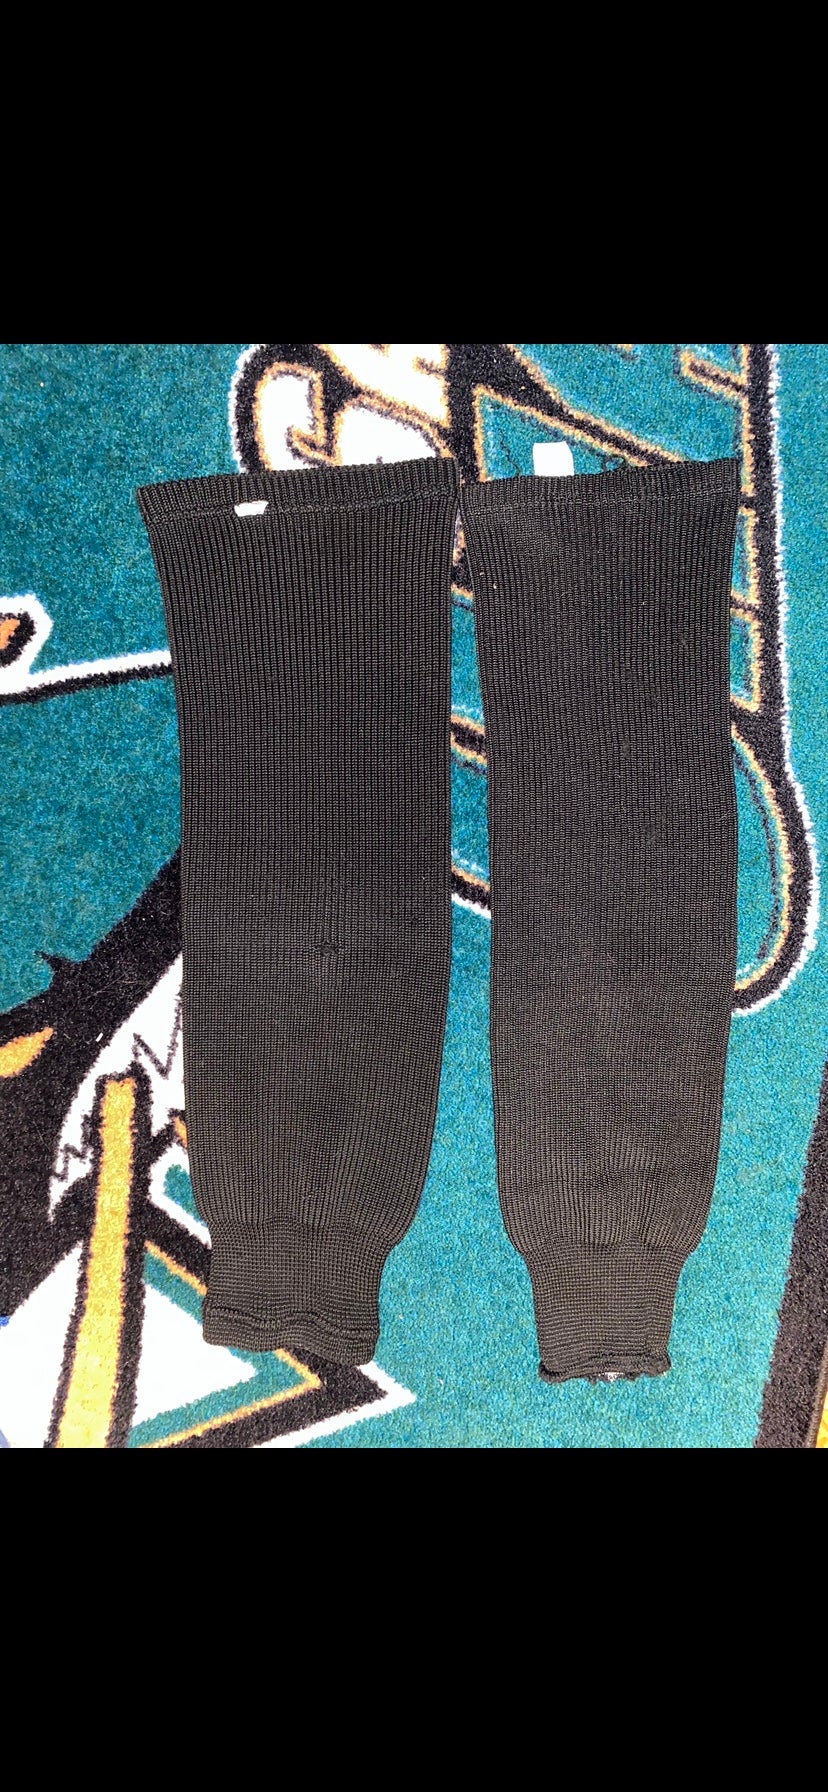 Knitted Hockey Socks - St Louis Blues - Senior